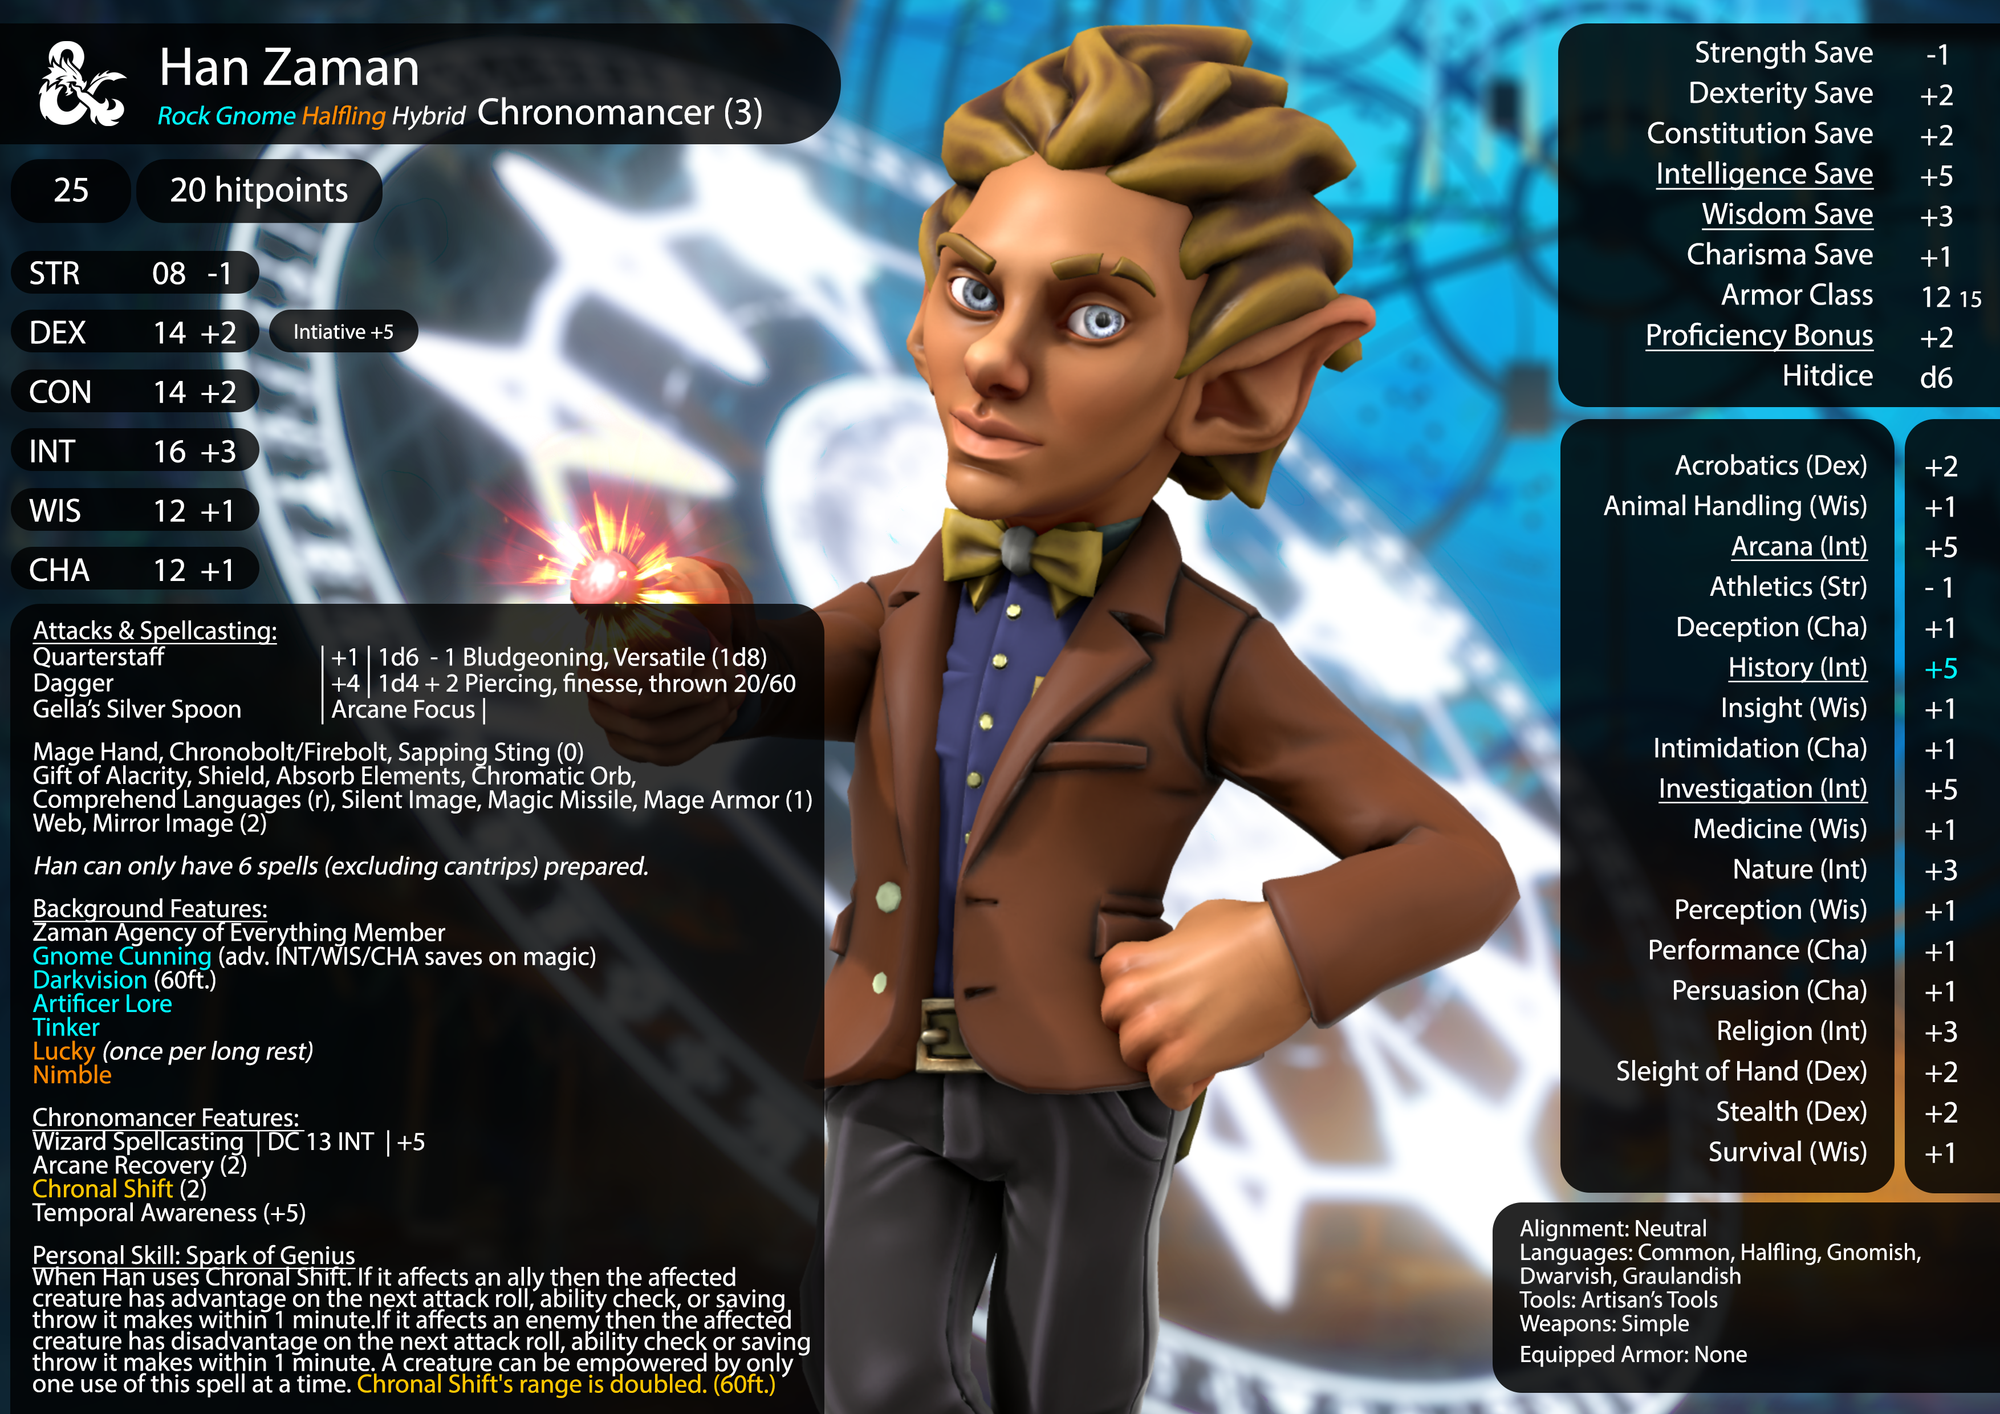 Custom character sheet by Maximus using HeroForge + Photoshop.